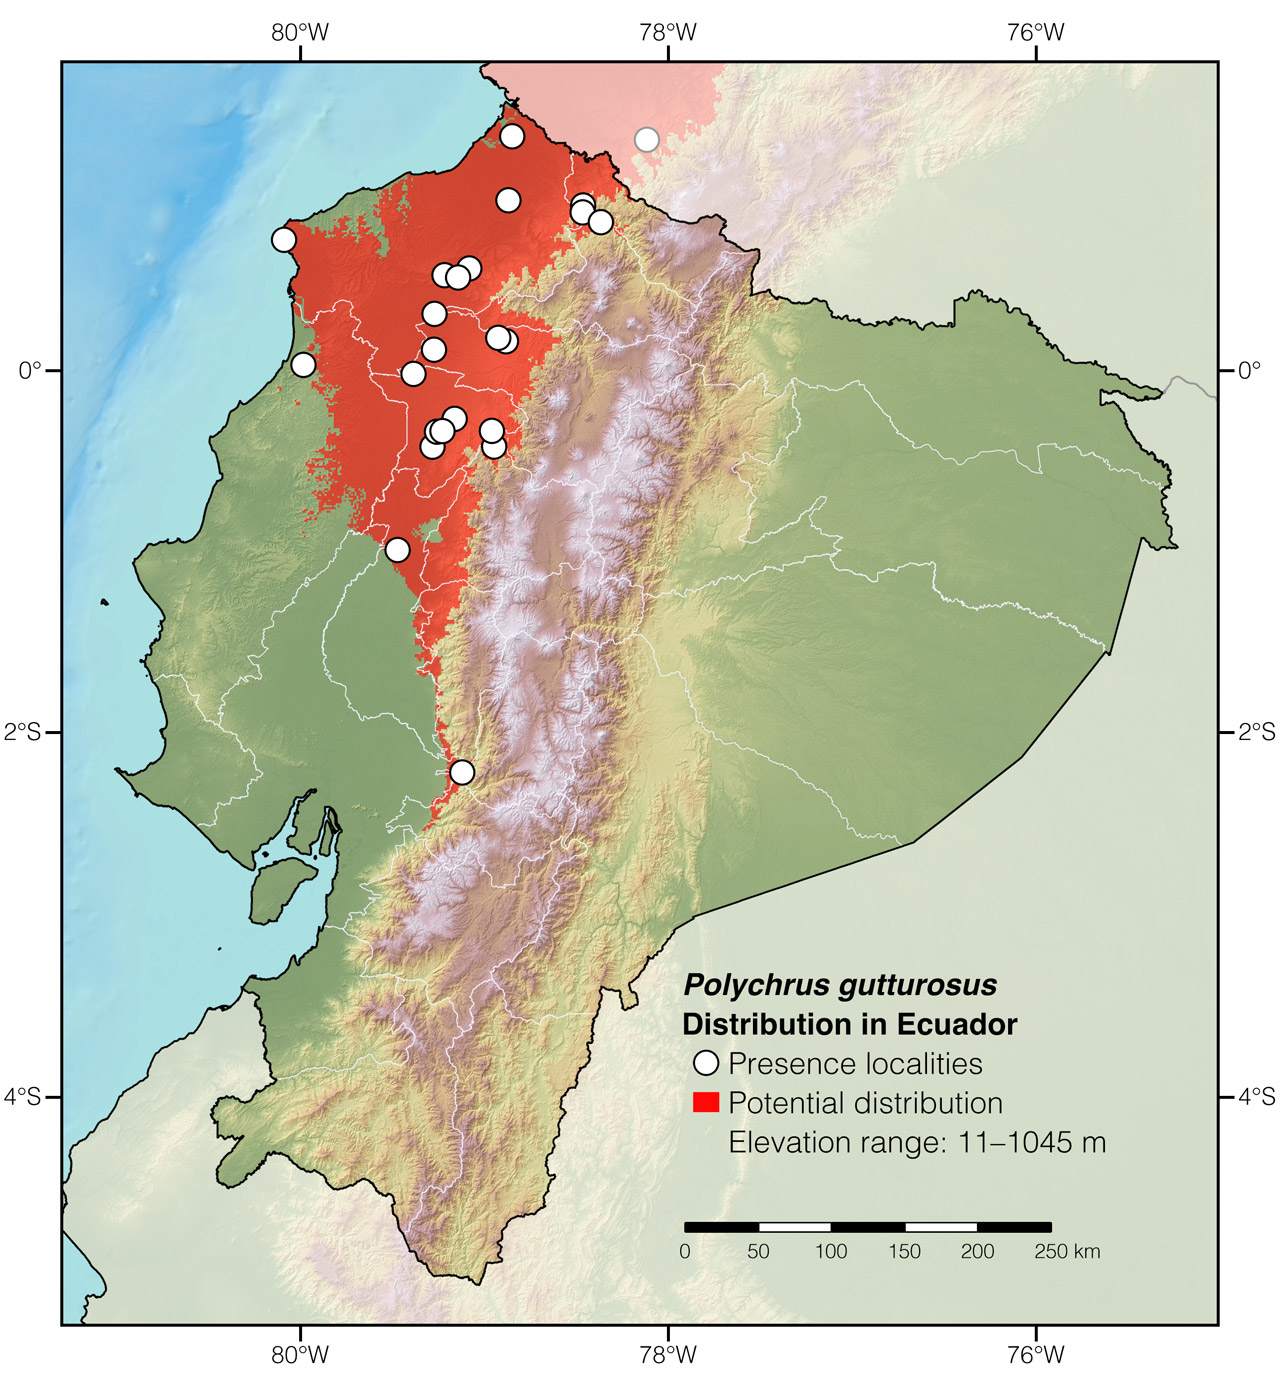 Distribution of Polychrus gutturosus in Ecuador